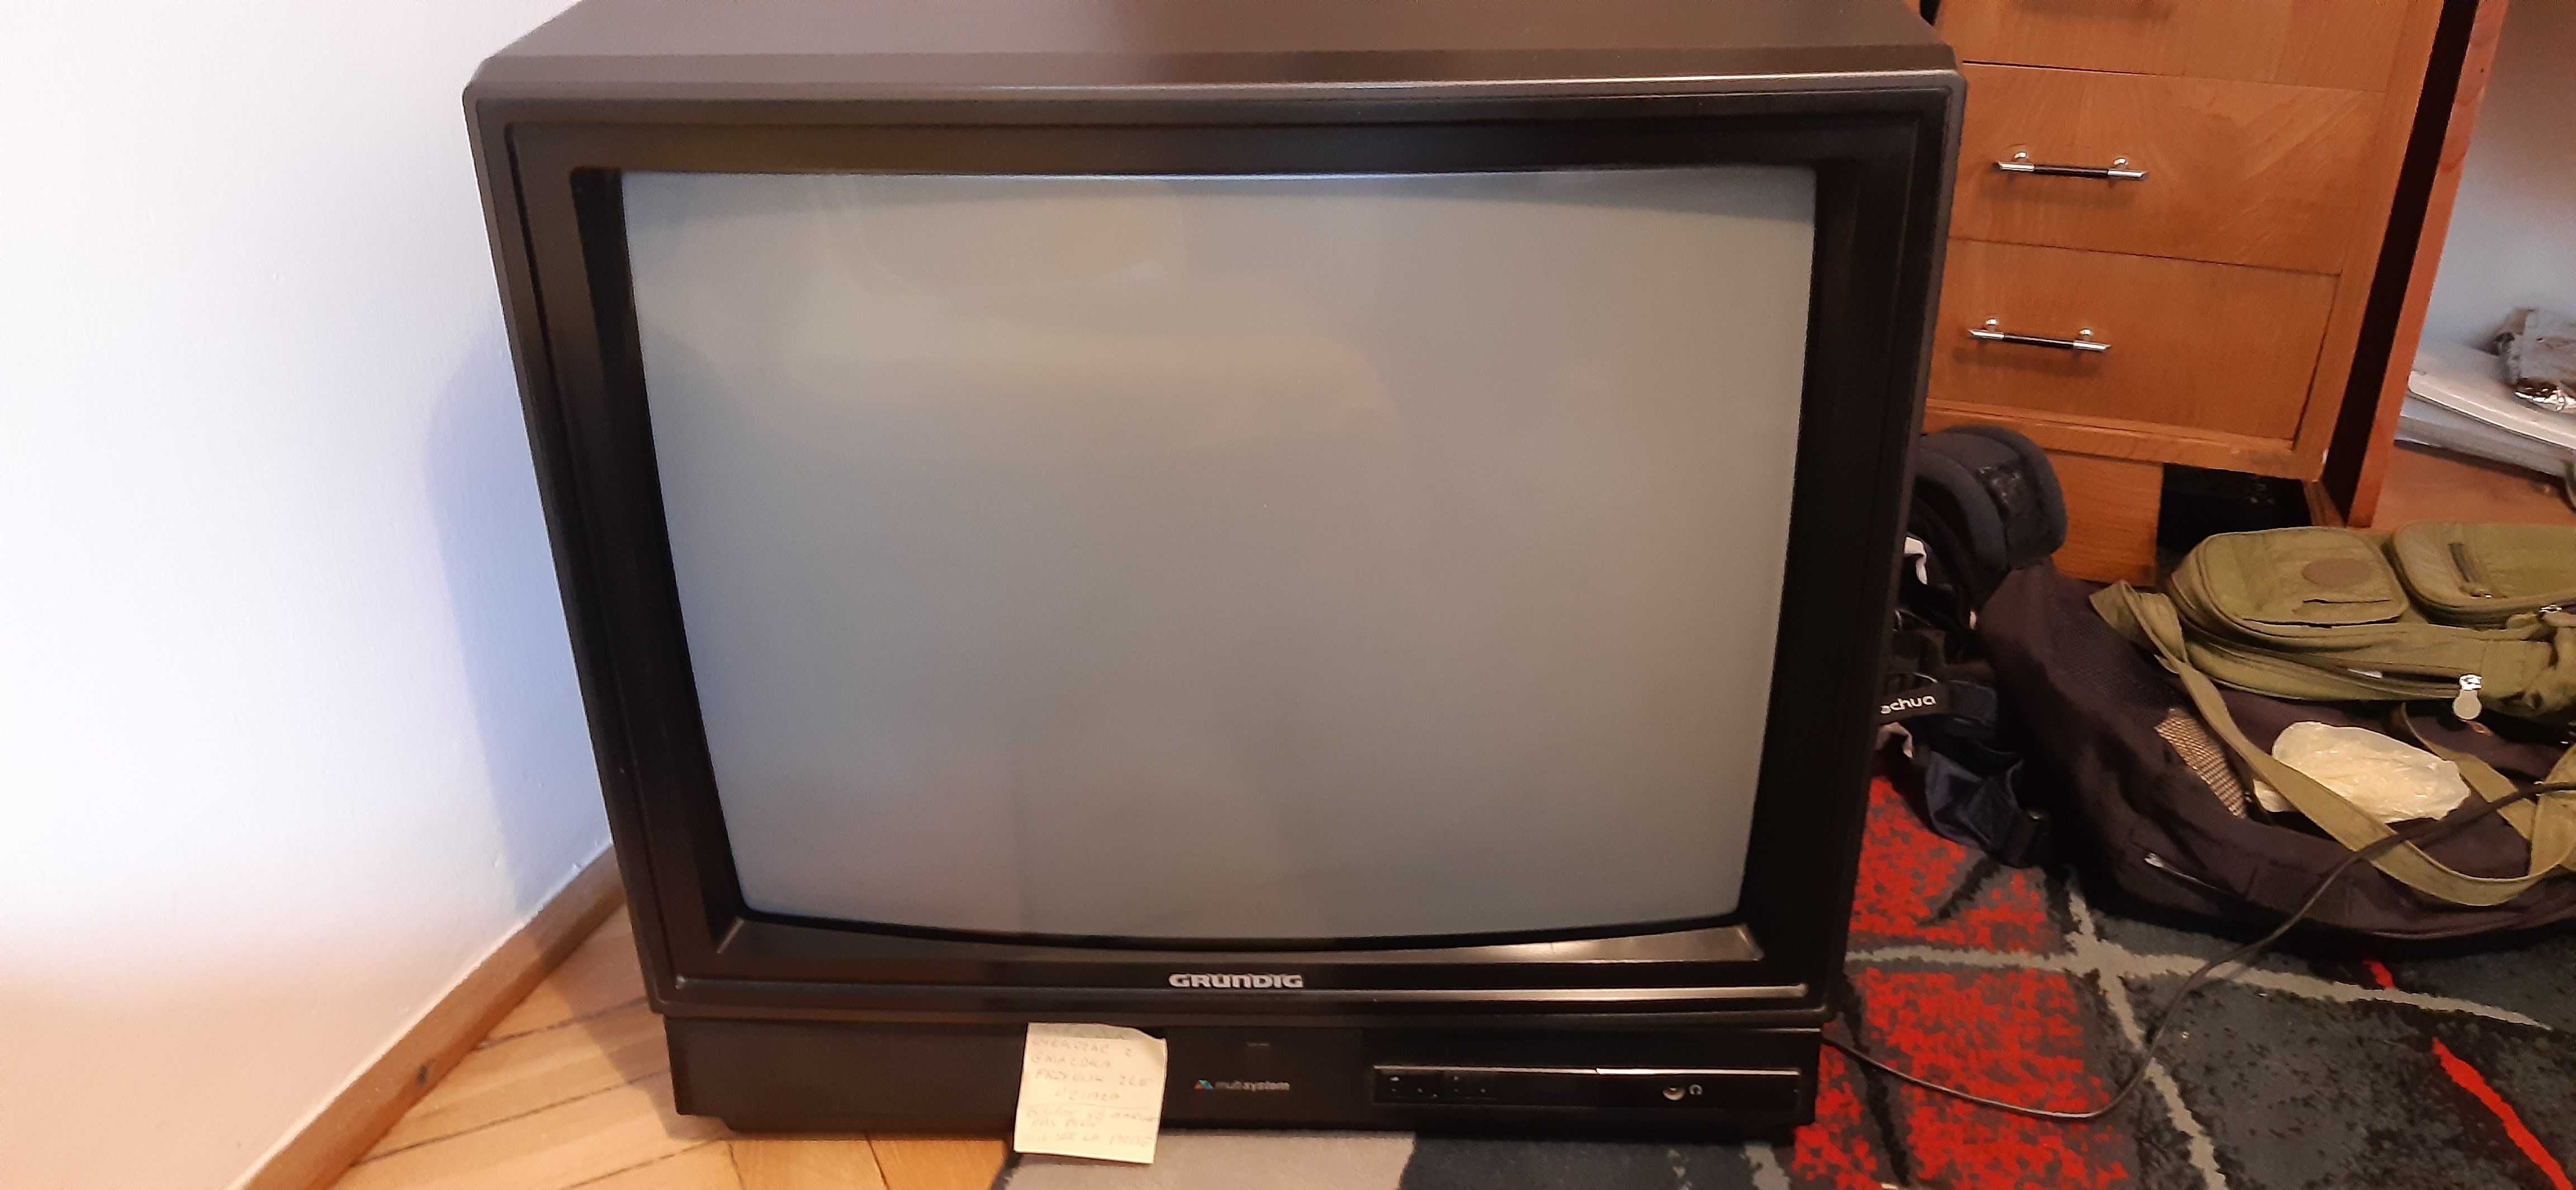 Stary telewizor Grundig T70-340/9a